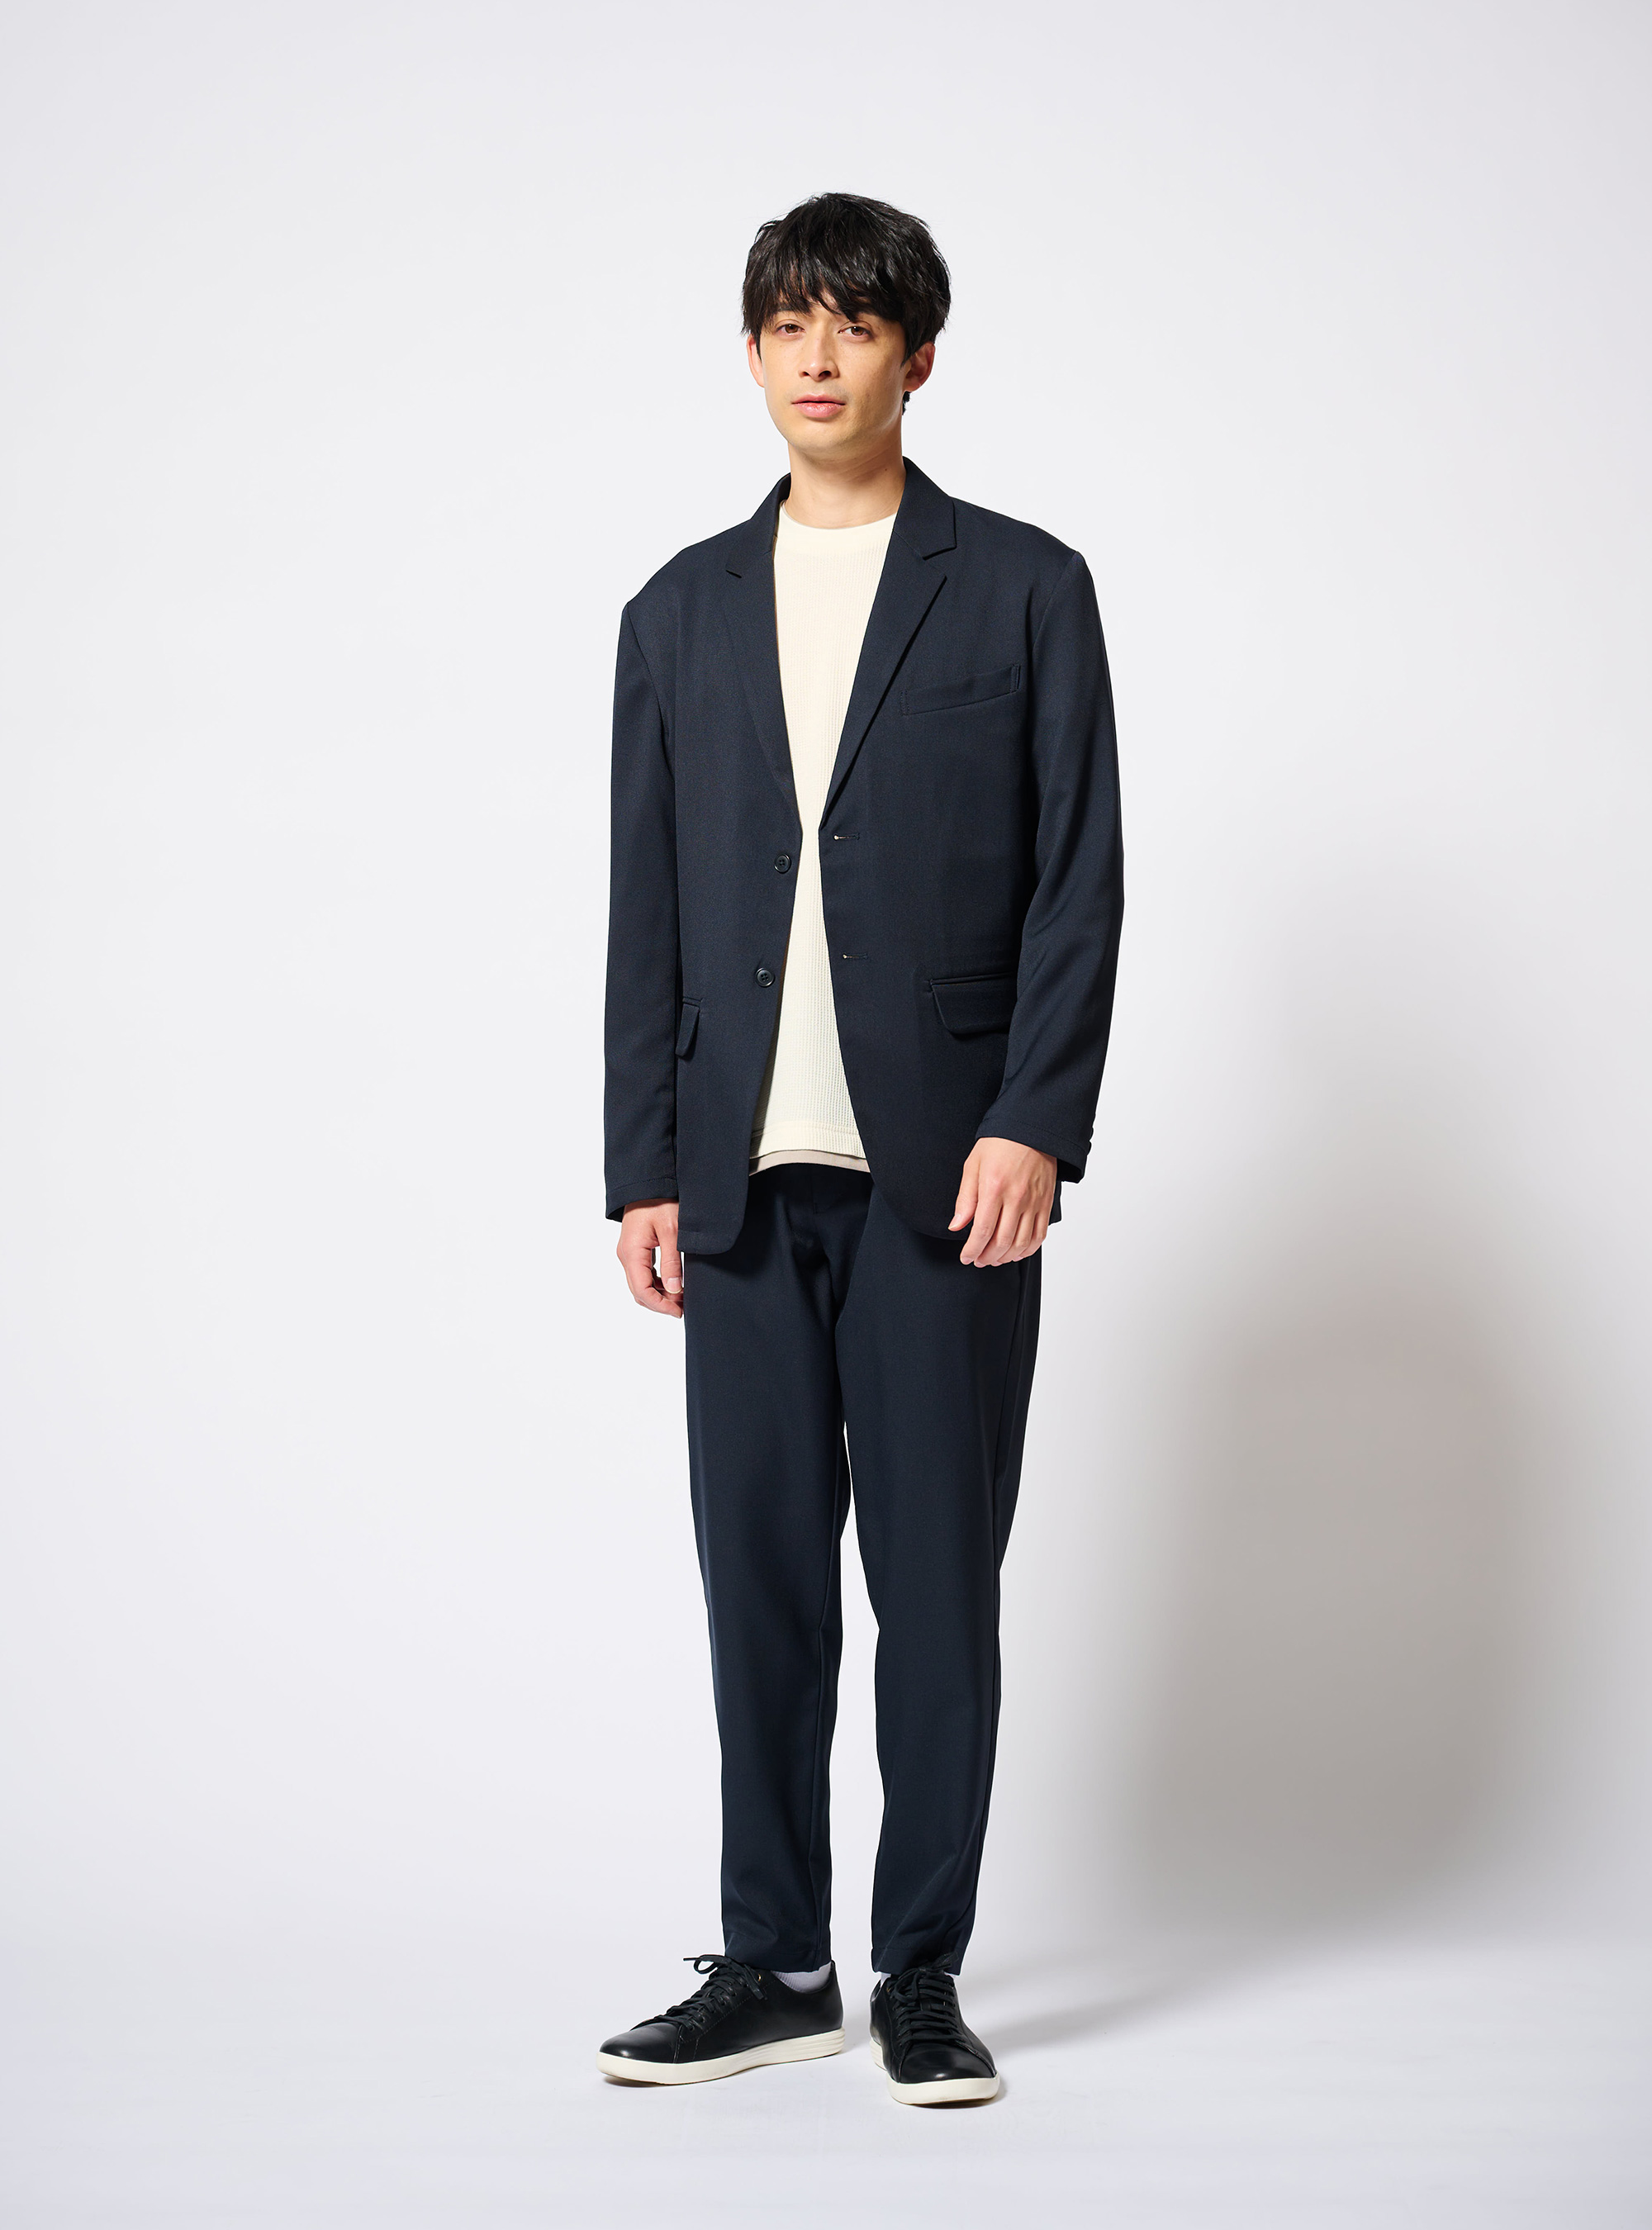 MILLIONTEX セットアップ 2B cool wool 元値57750円 - スーツ